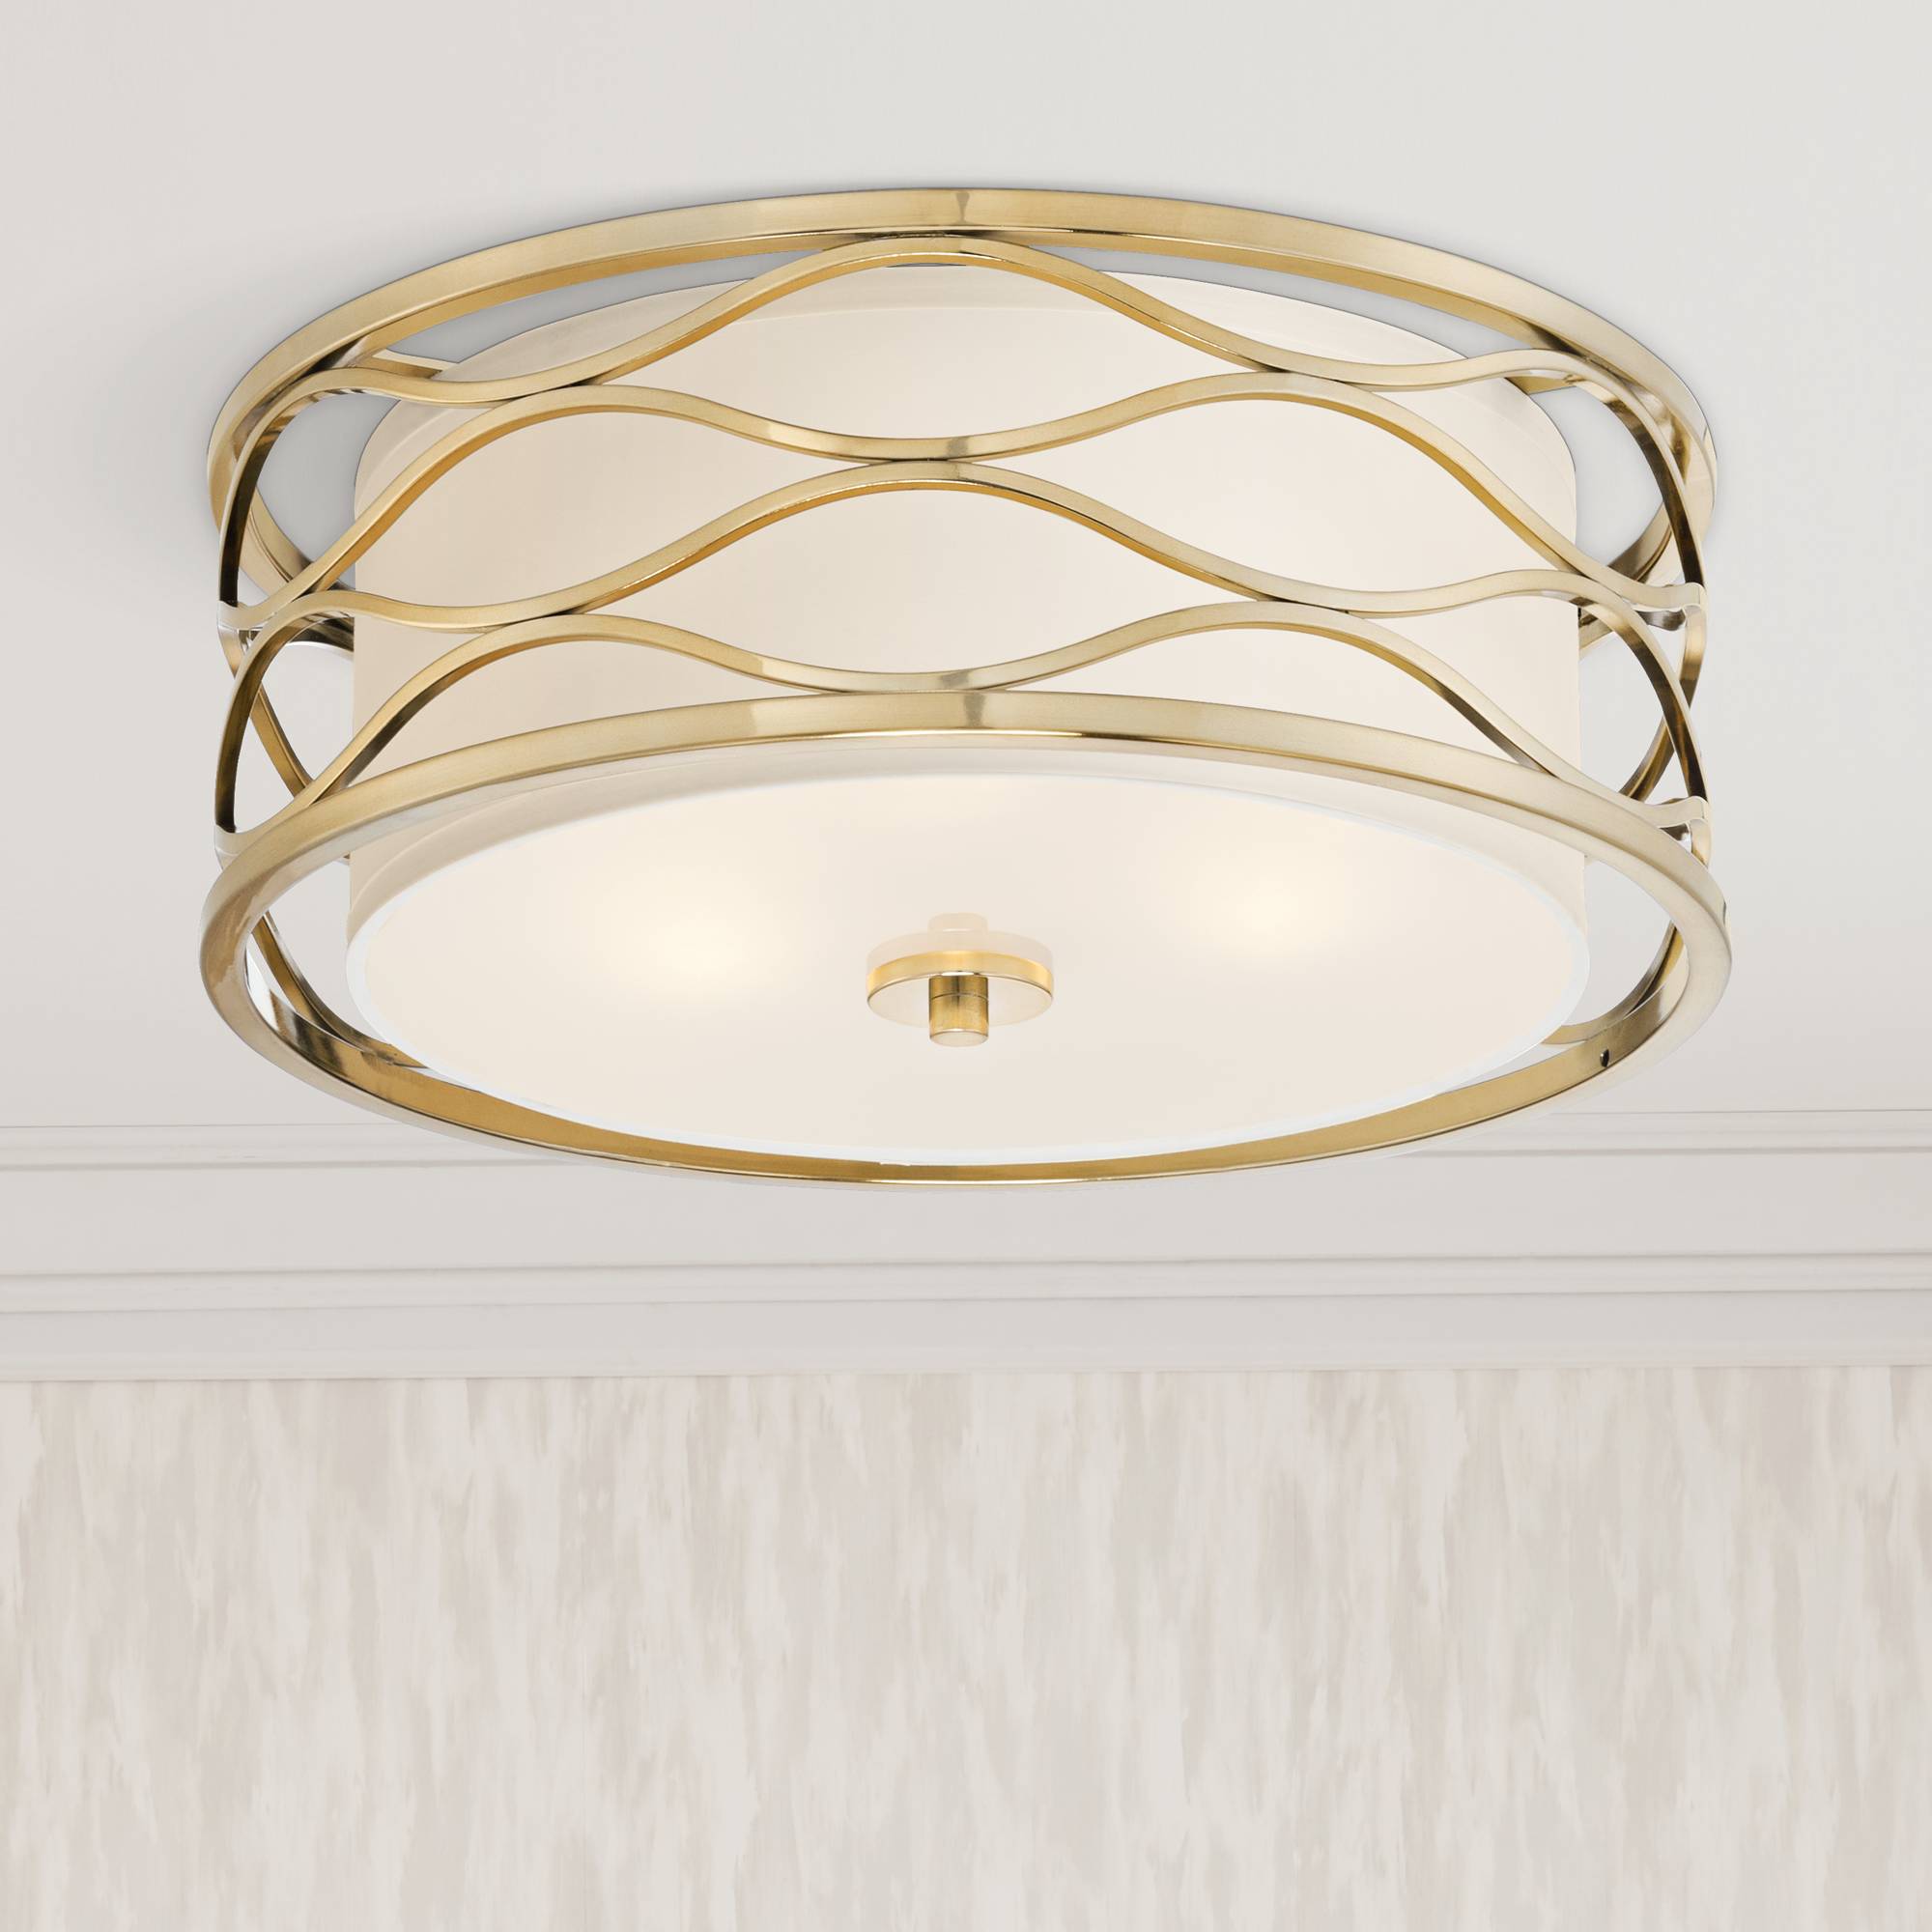 Modern Ceiling Light Flush Mount Fixture Plated Gold 16 For Bedroom